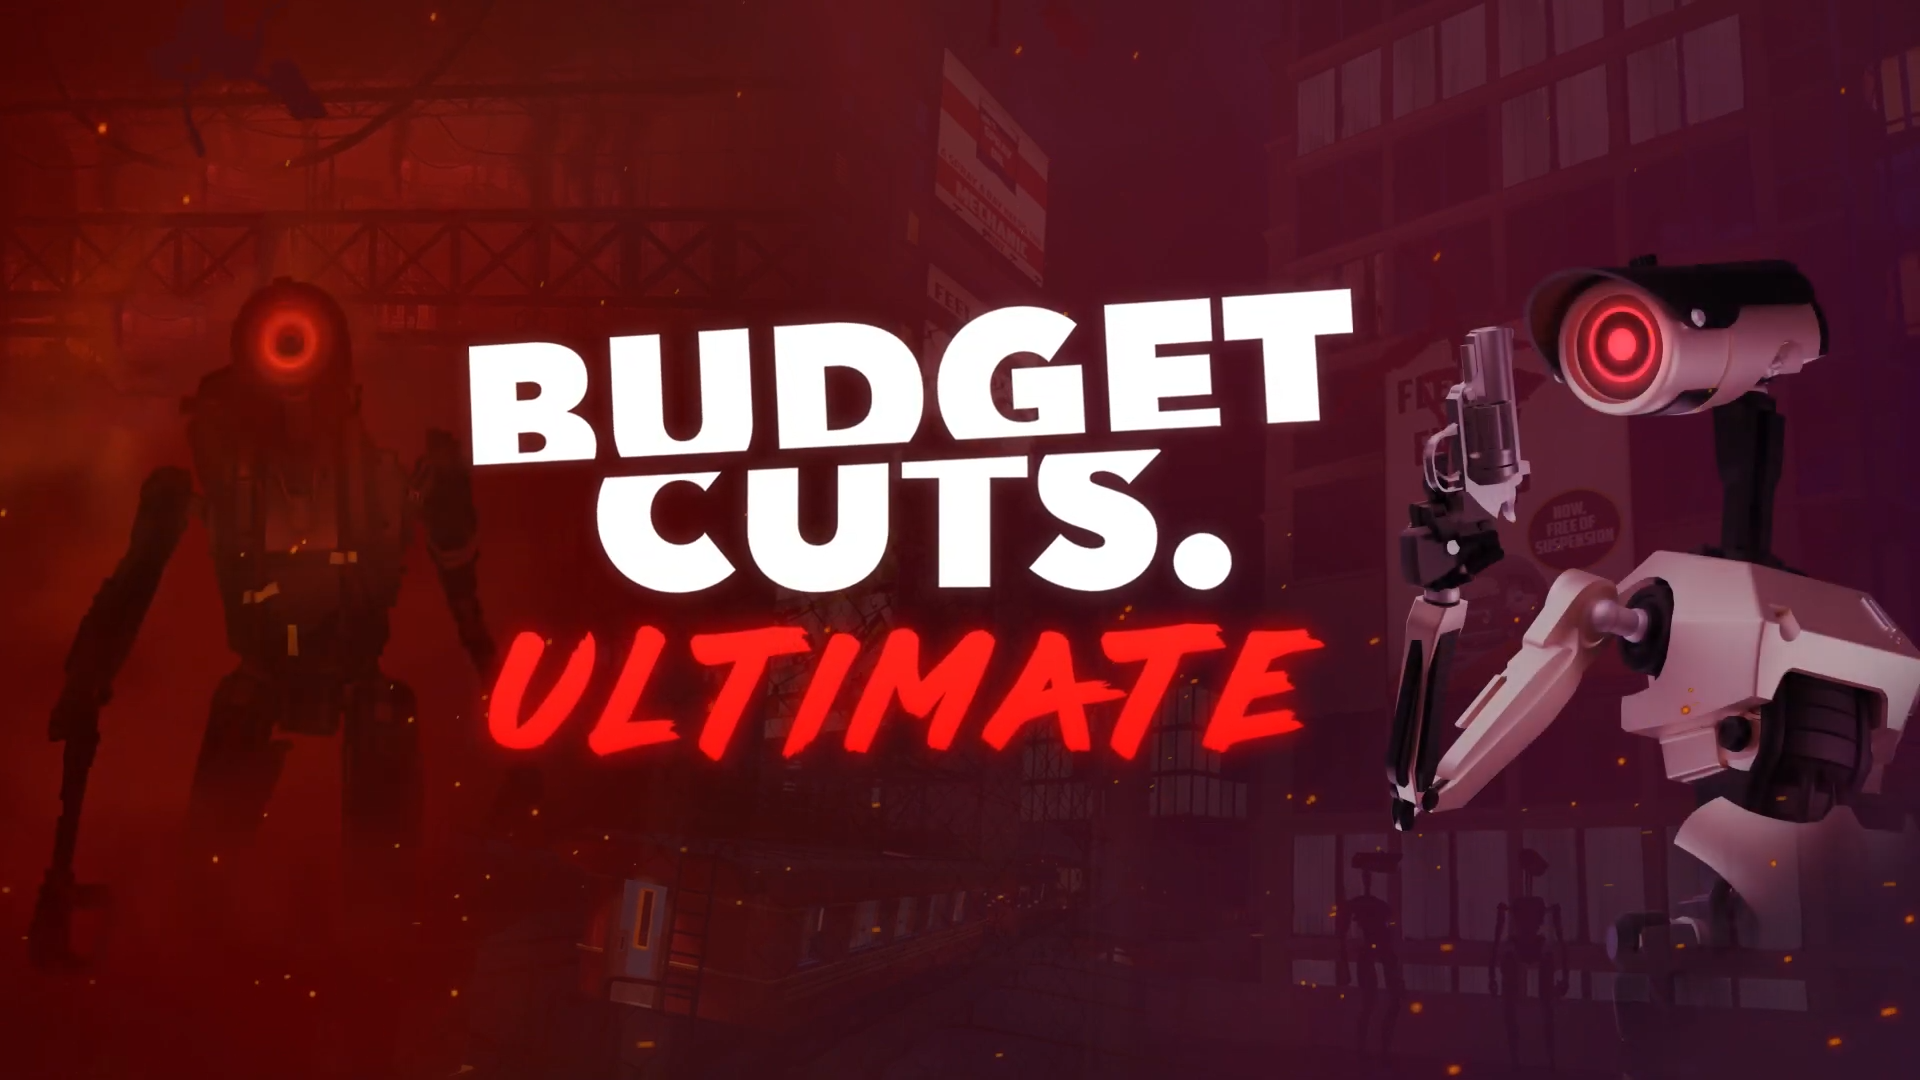 Budget cuts vr. Budget Cuts 2 VR. Budget Cuts 2 игра. Budget Cuts Ultimate.